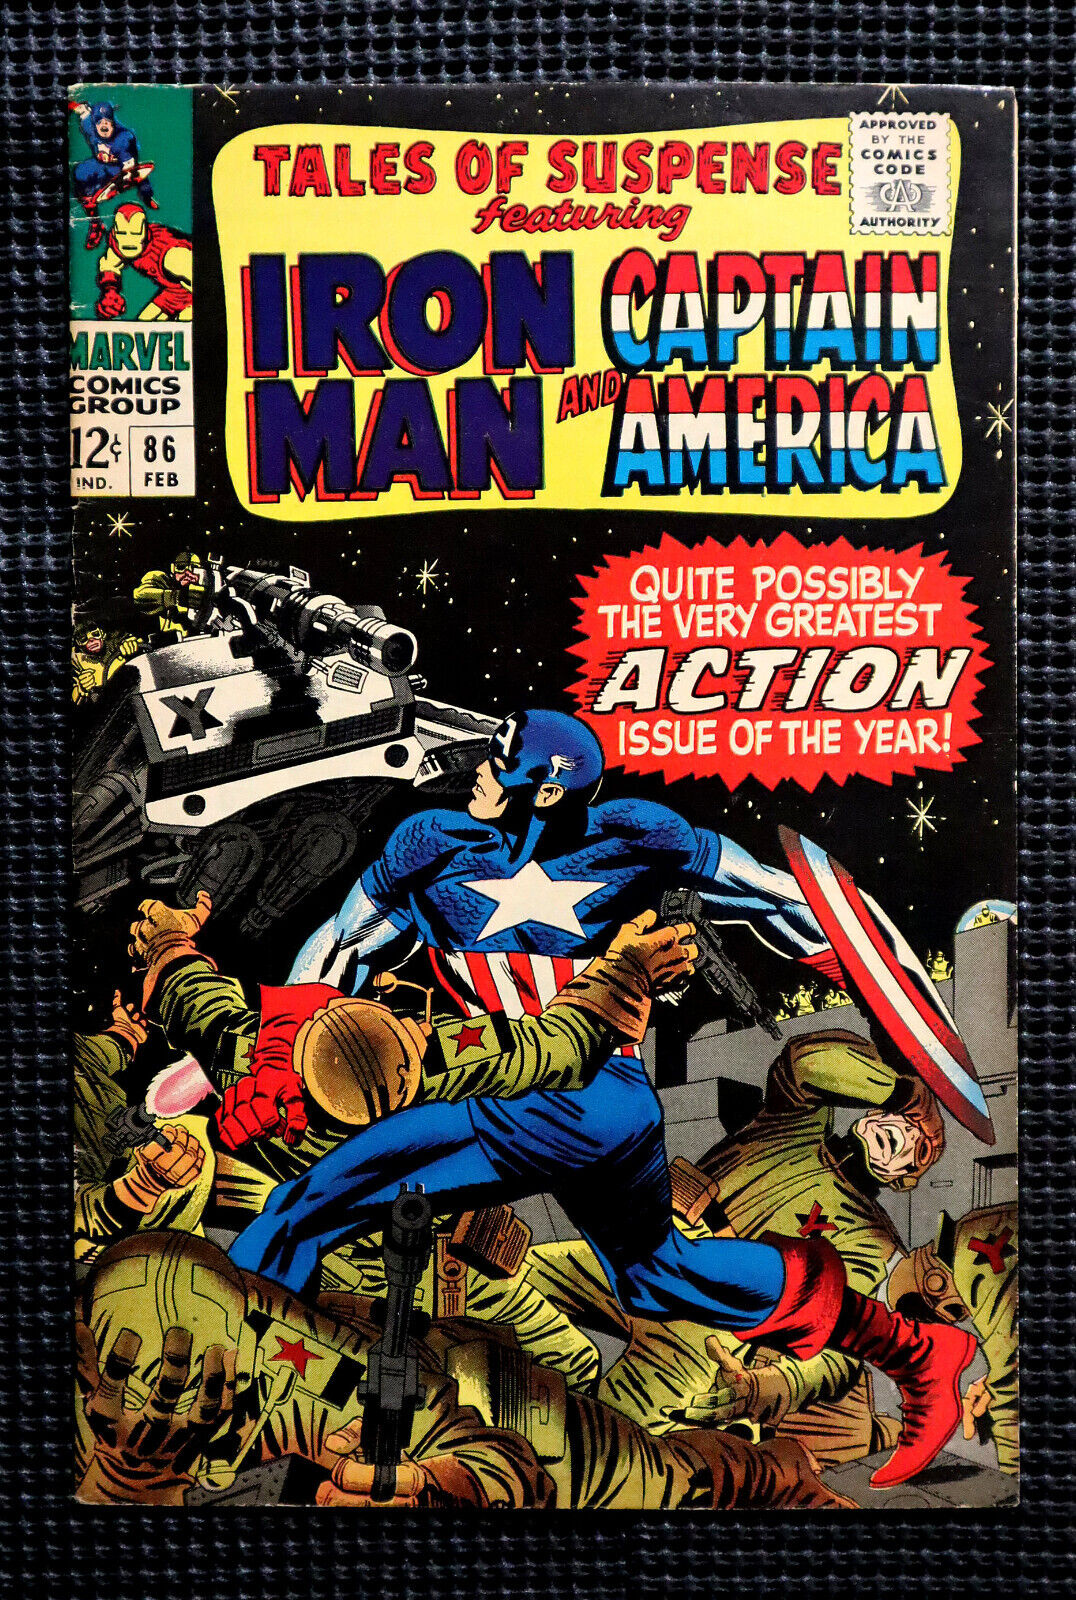 1967 Tales of Suspense 86 Marvel Comics 2/67:Captain America, 12¢ Iron Man cover